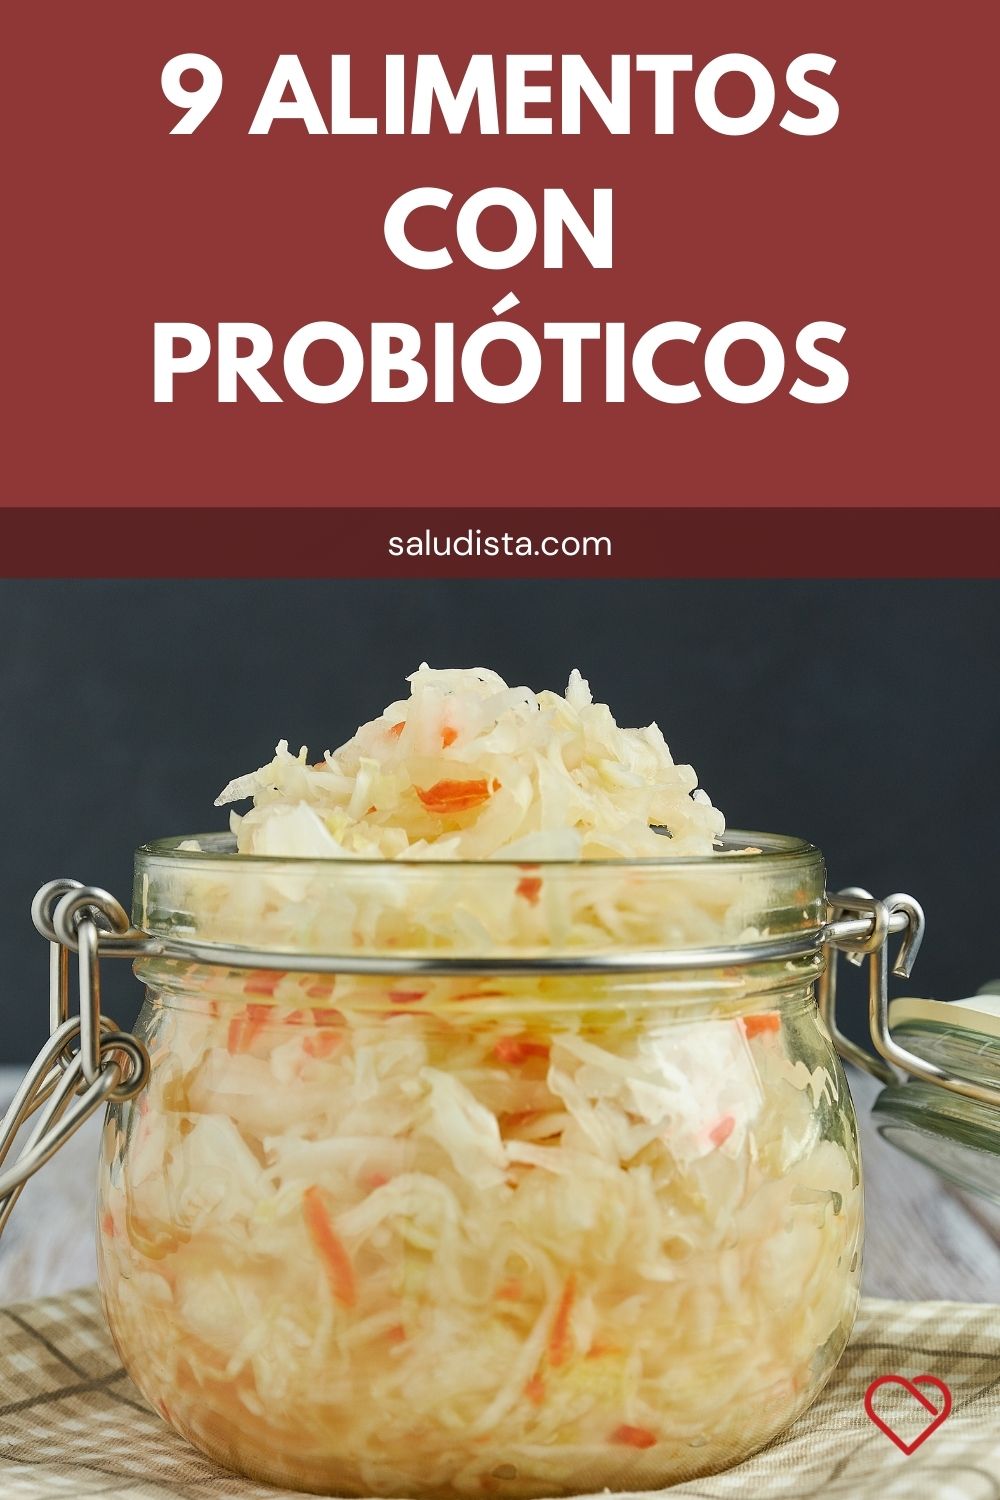 9 Alimentos con probióticos